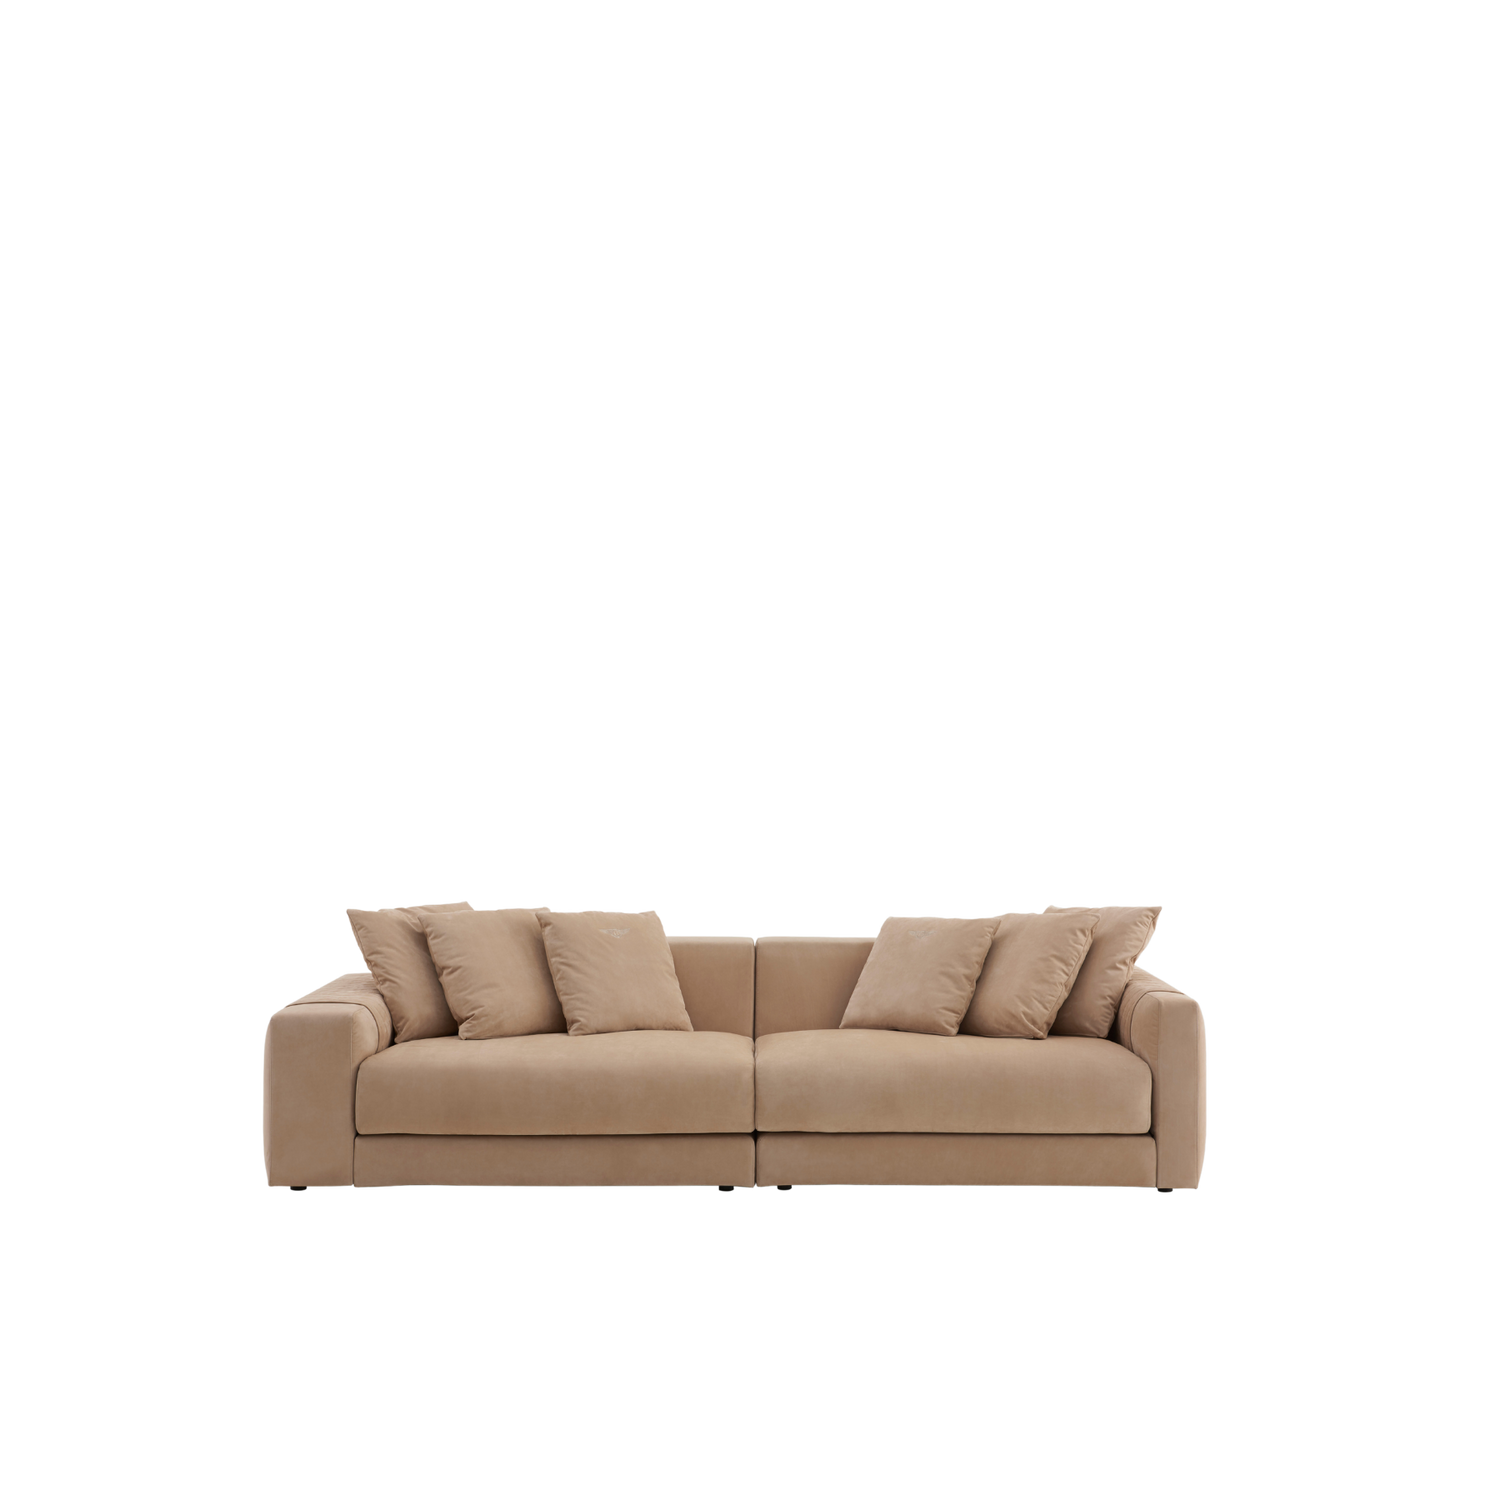 Stowe Sofa